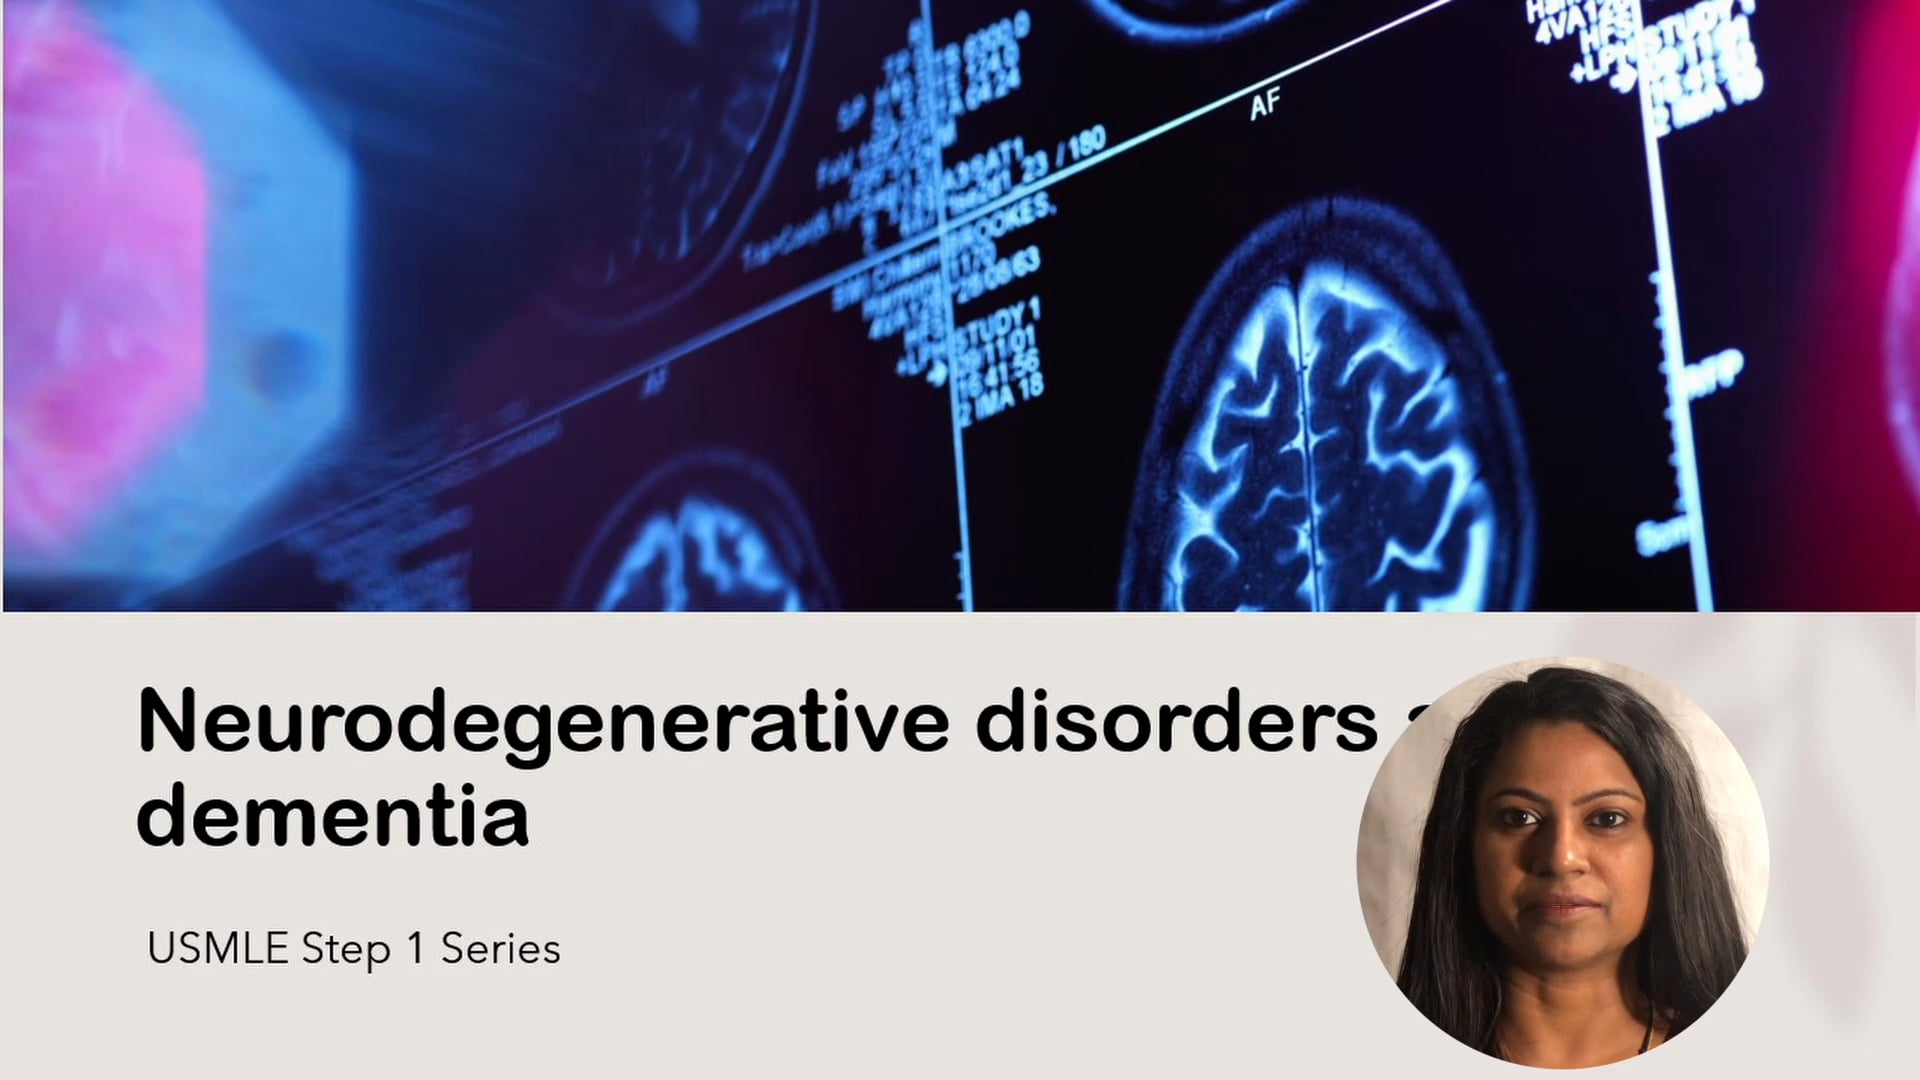 Neurodegenerative disorders and dementia